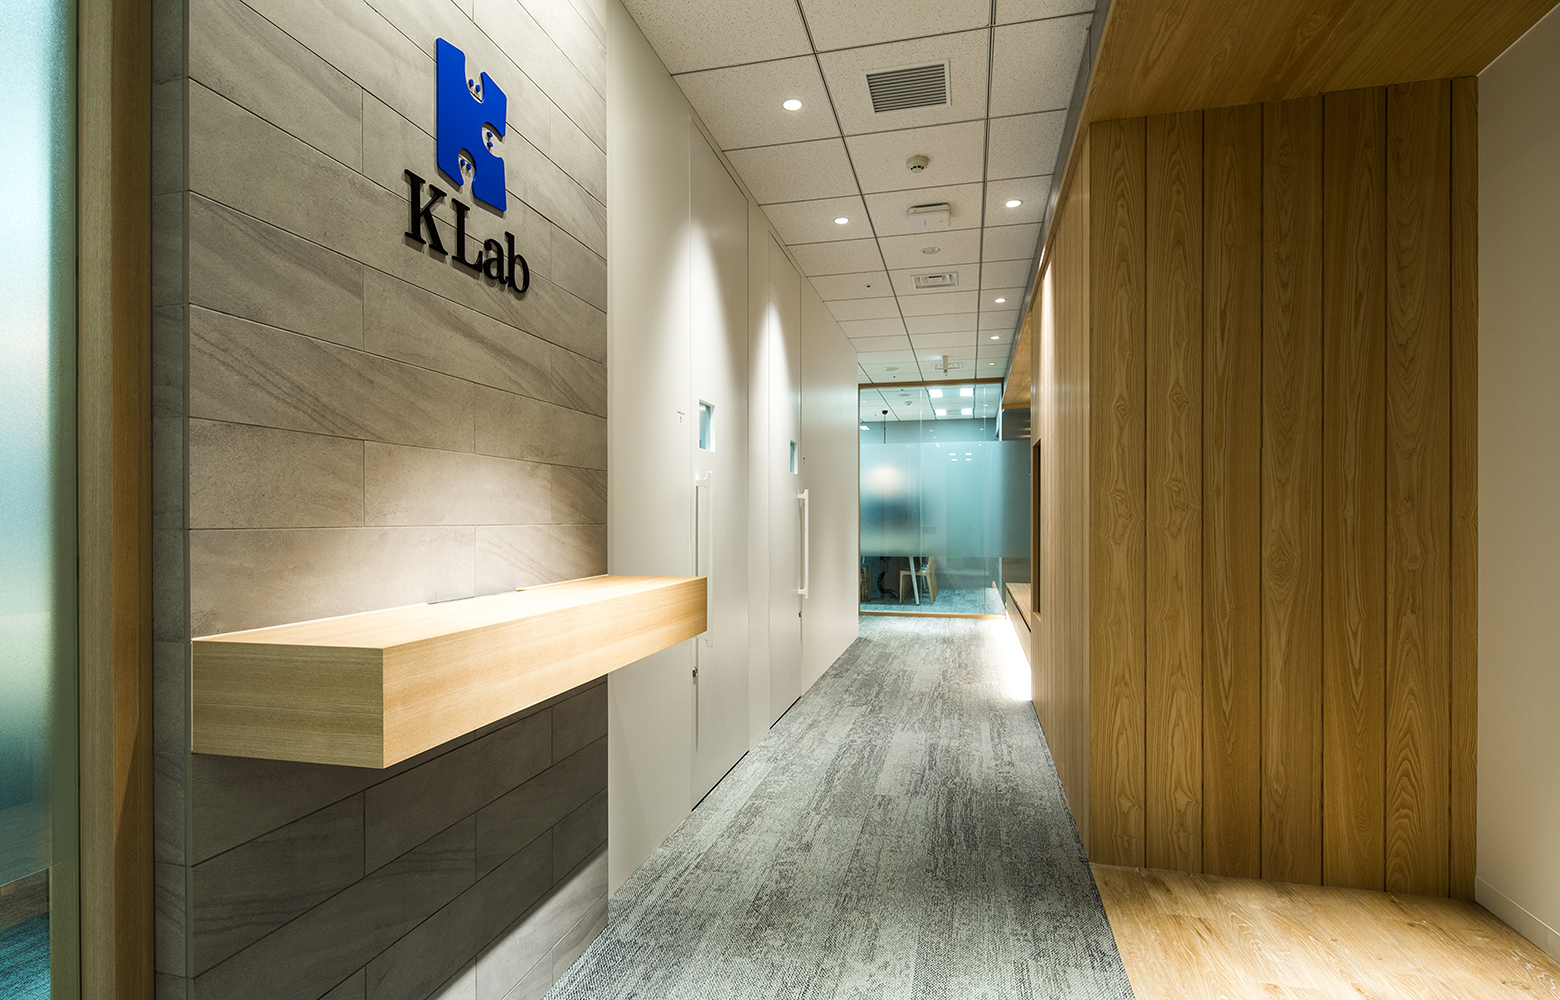 KLab株式会社 Roppongi Office Entrance デザイン・レイアウト事例